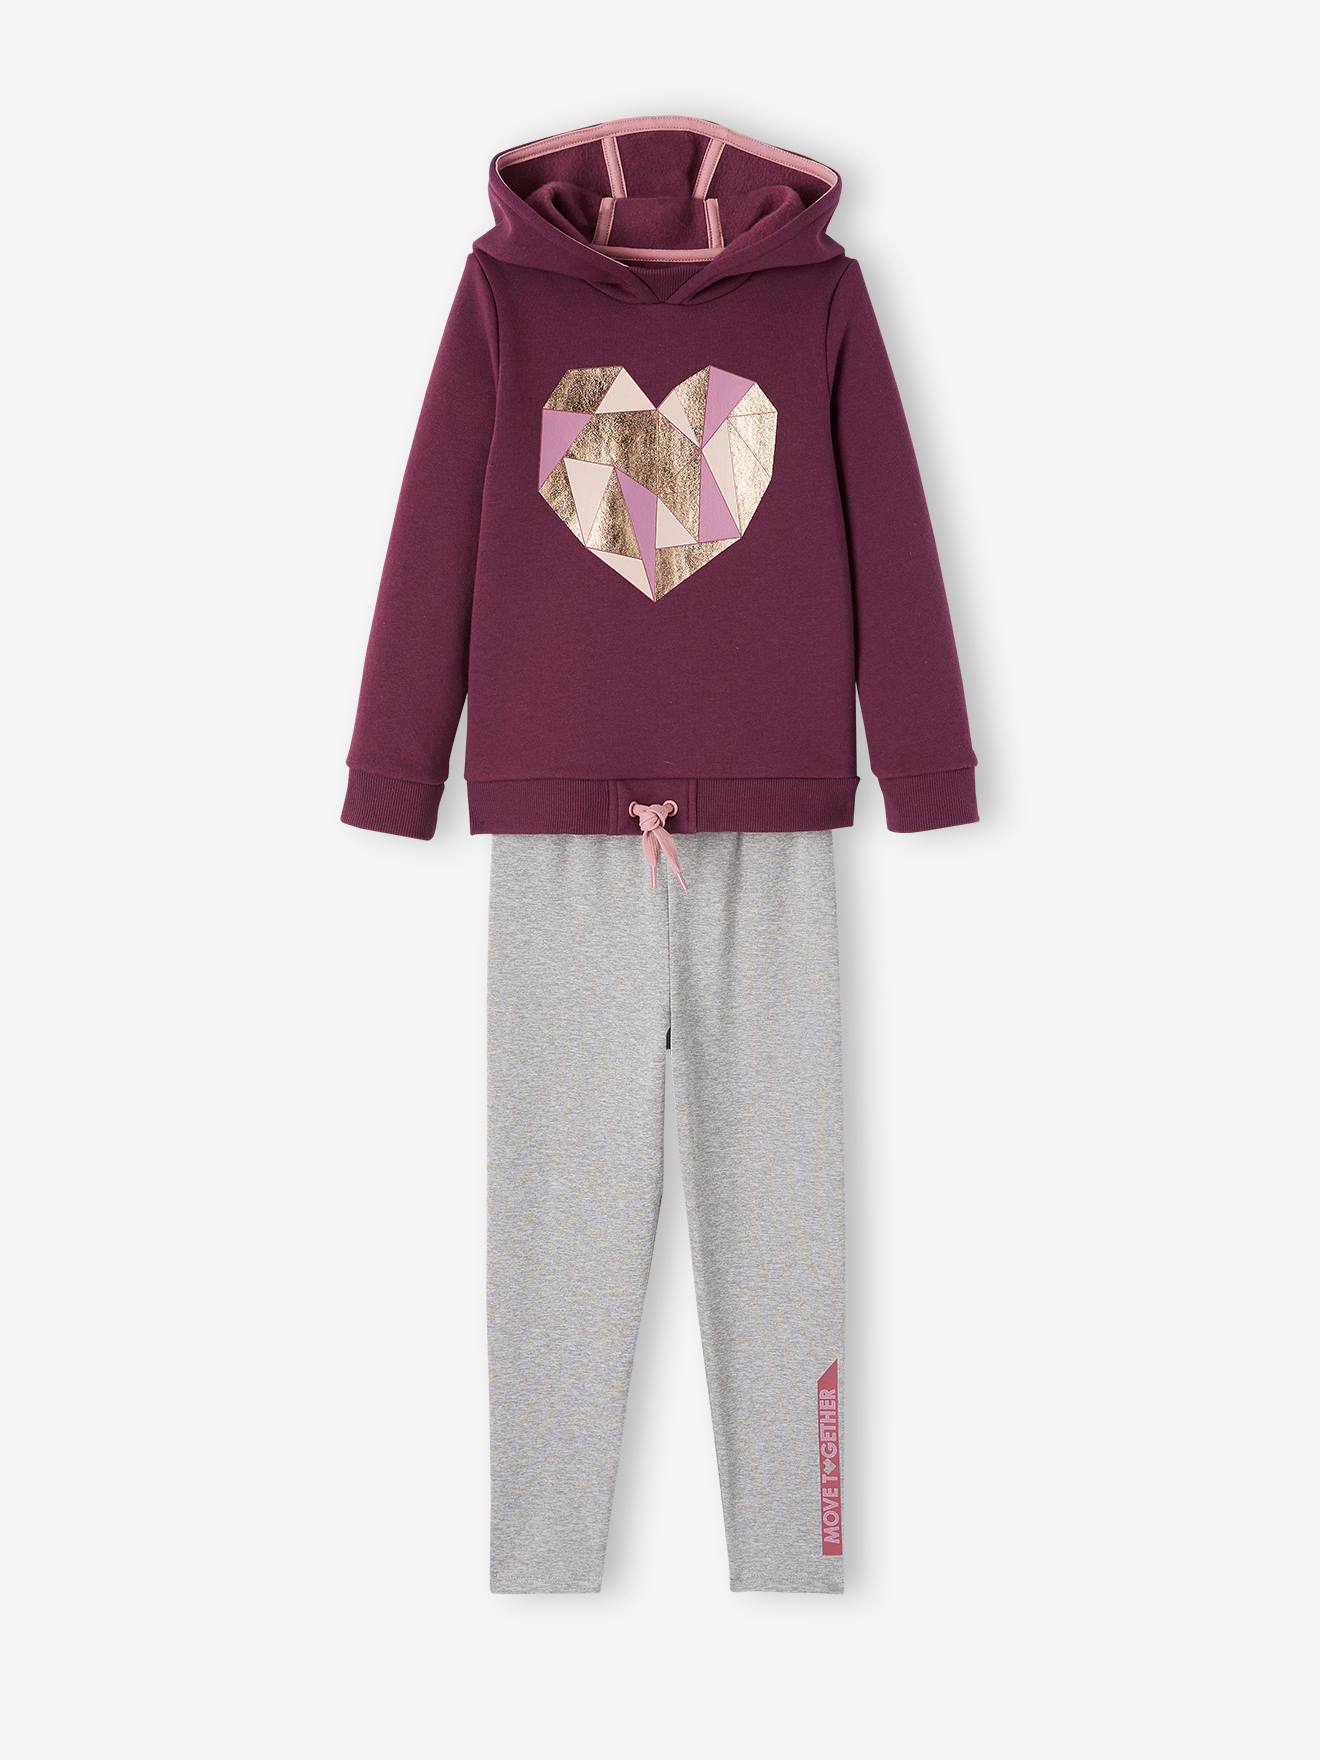 Sports Combo: Sweatshirt with Heart & Leggings, for Girls - purple dark  solid with design, Girls